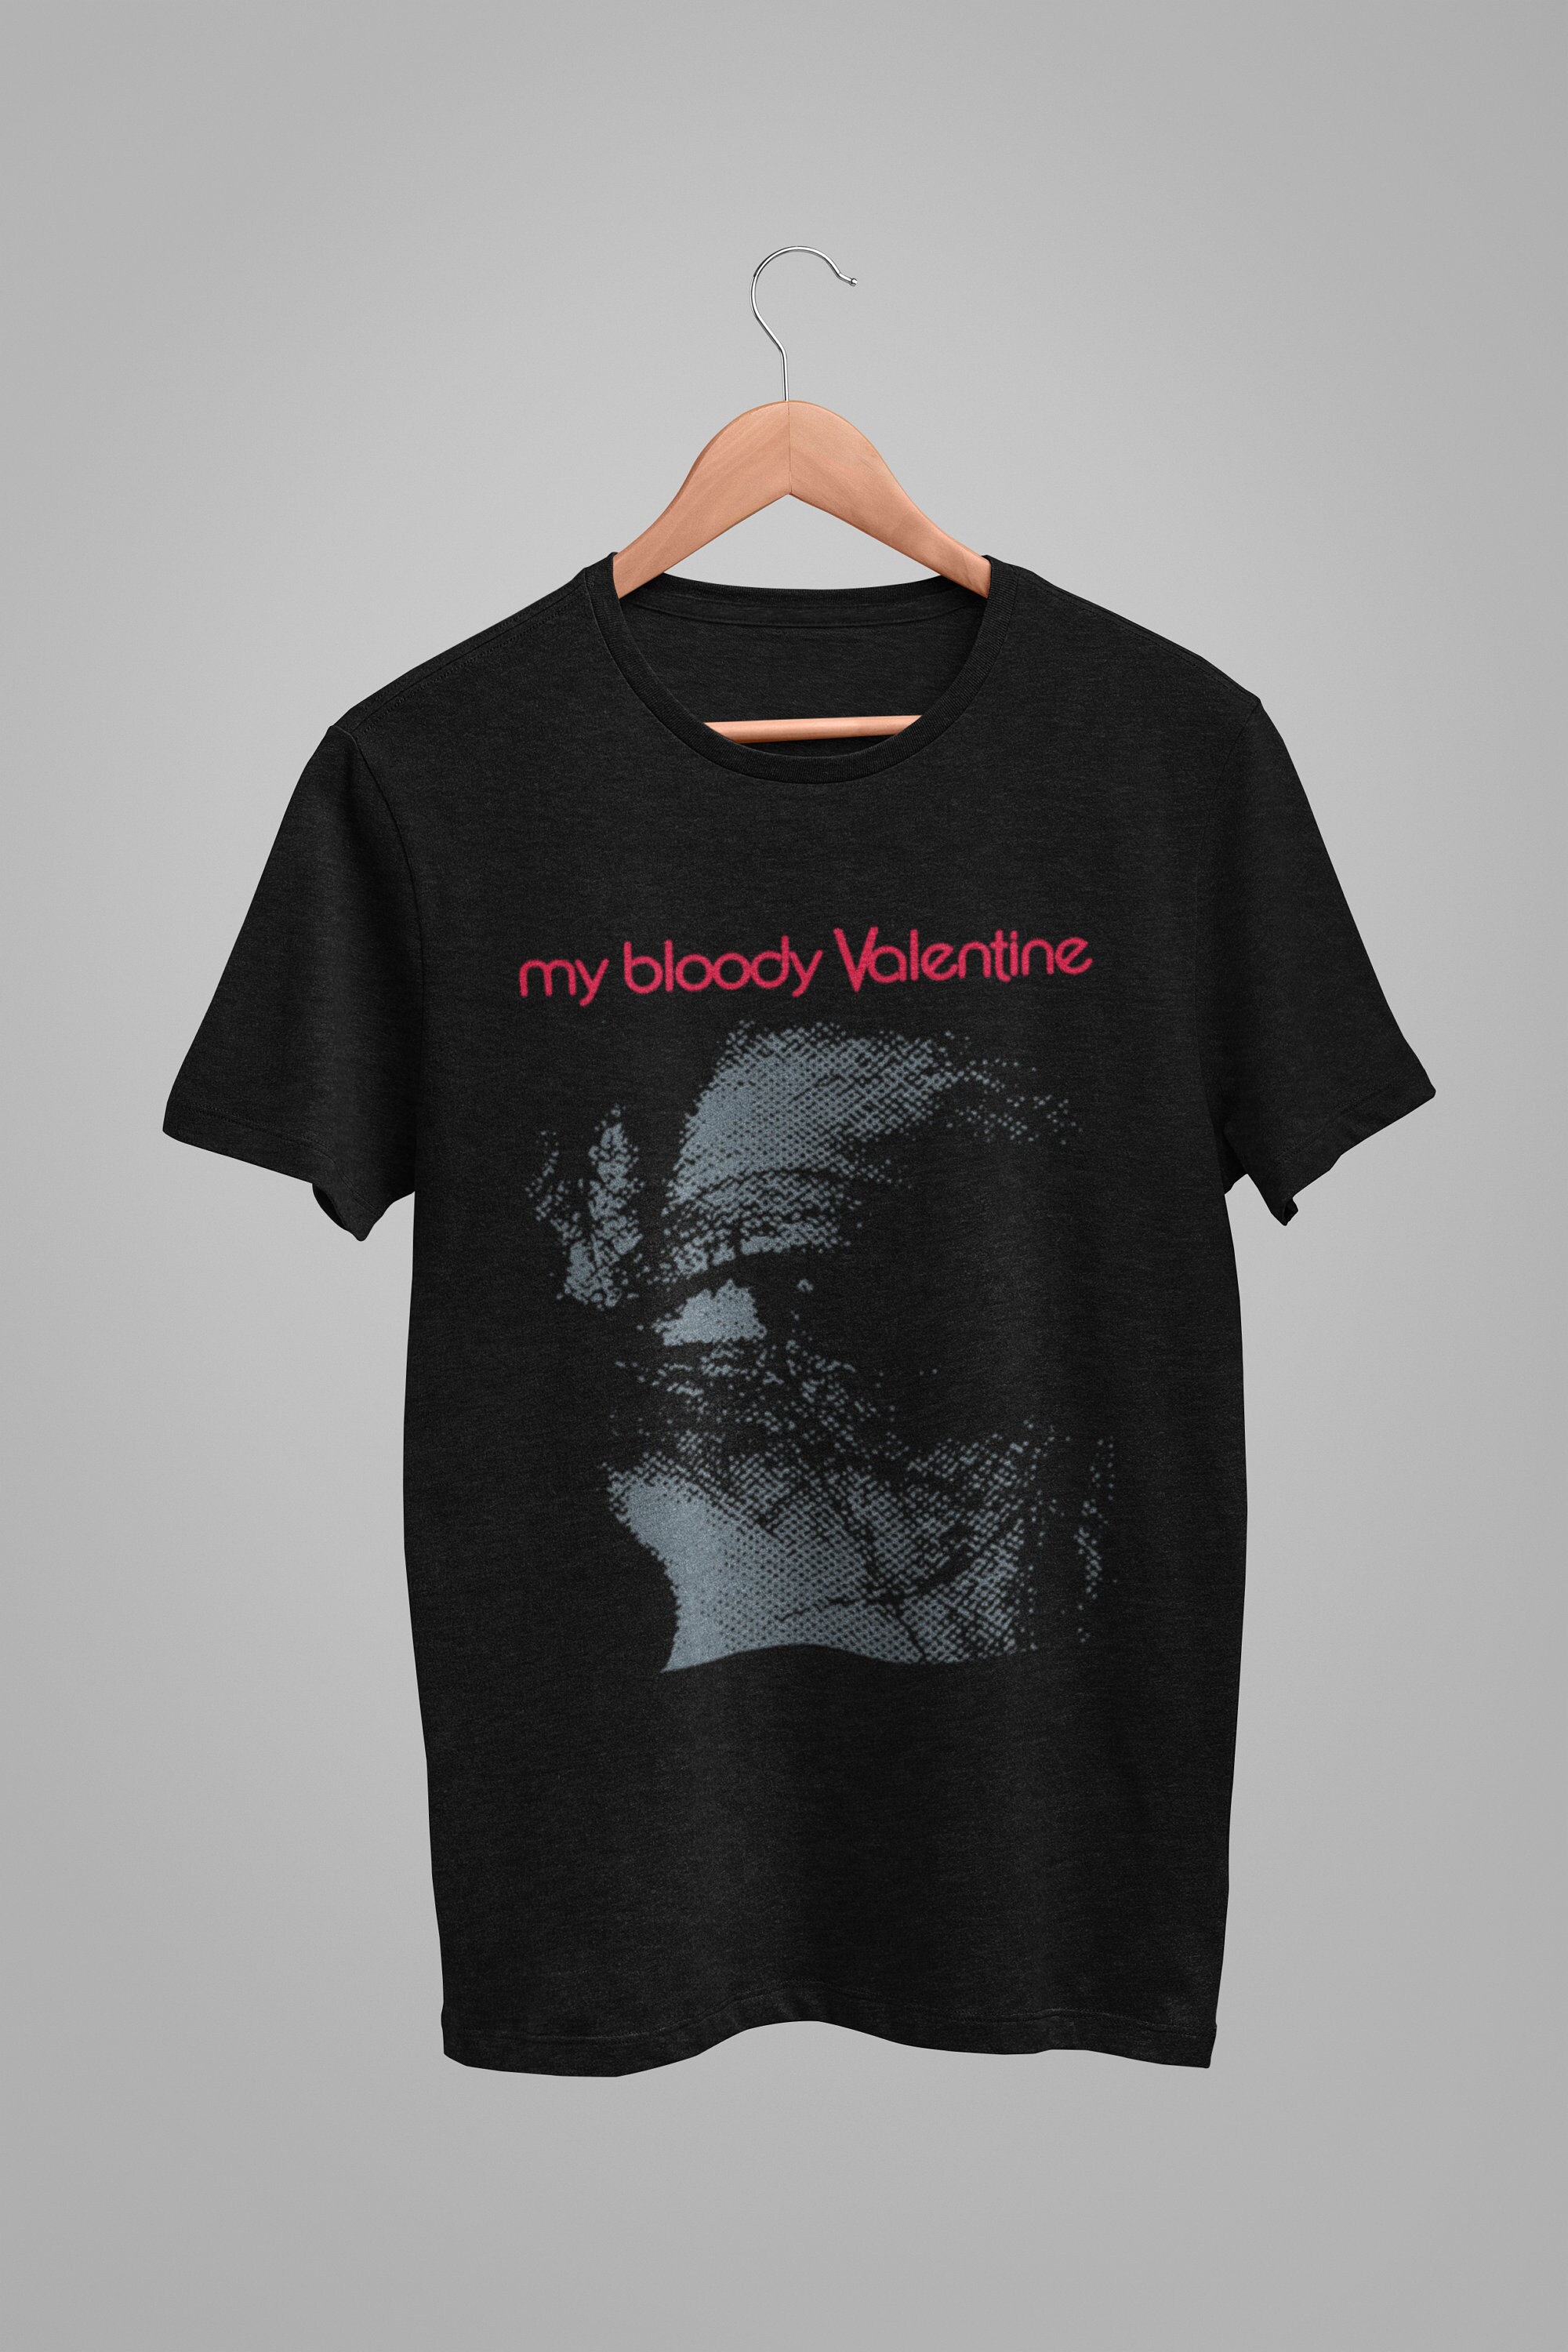 my bloody valentine shirt